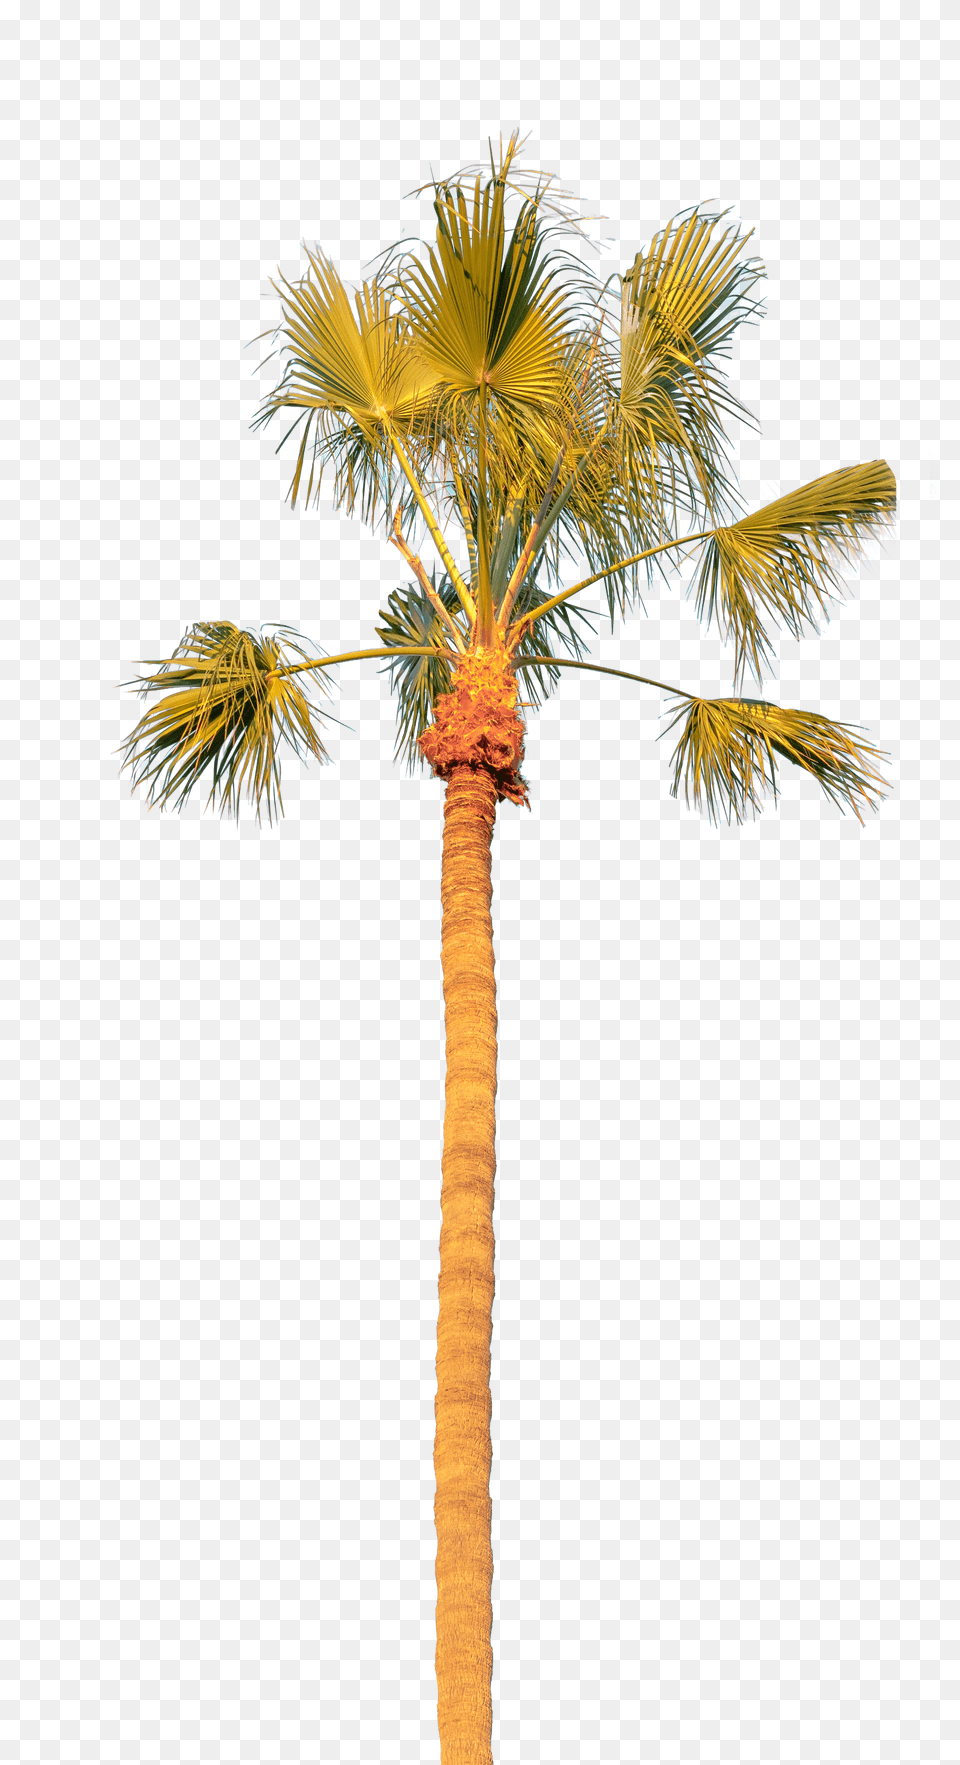 Palm Tree Solo Transparent Background Transparent Borassus Flabellifer Png Image